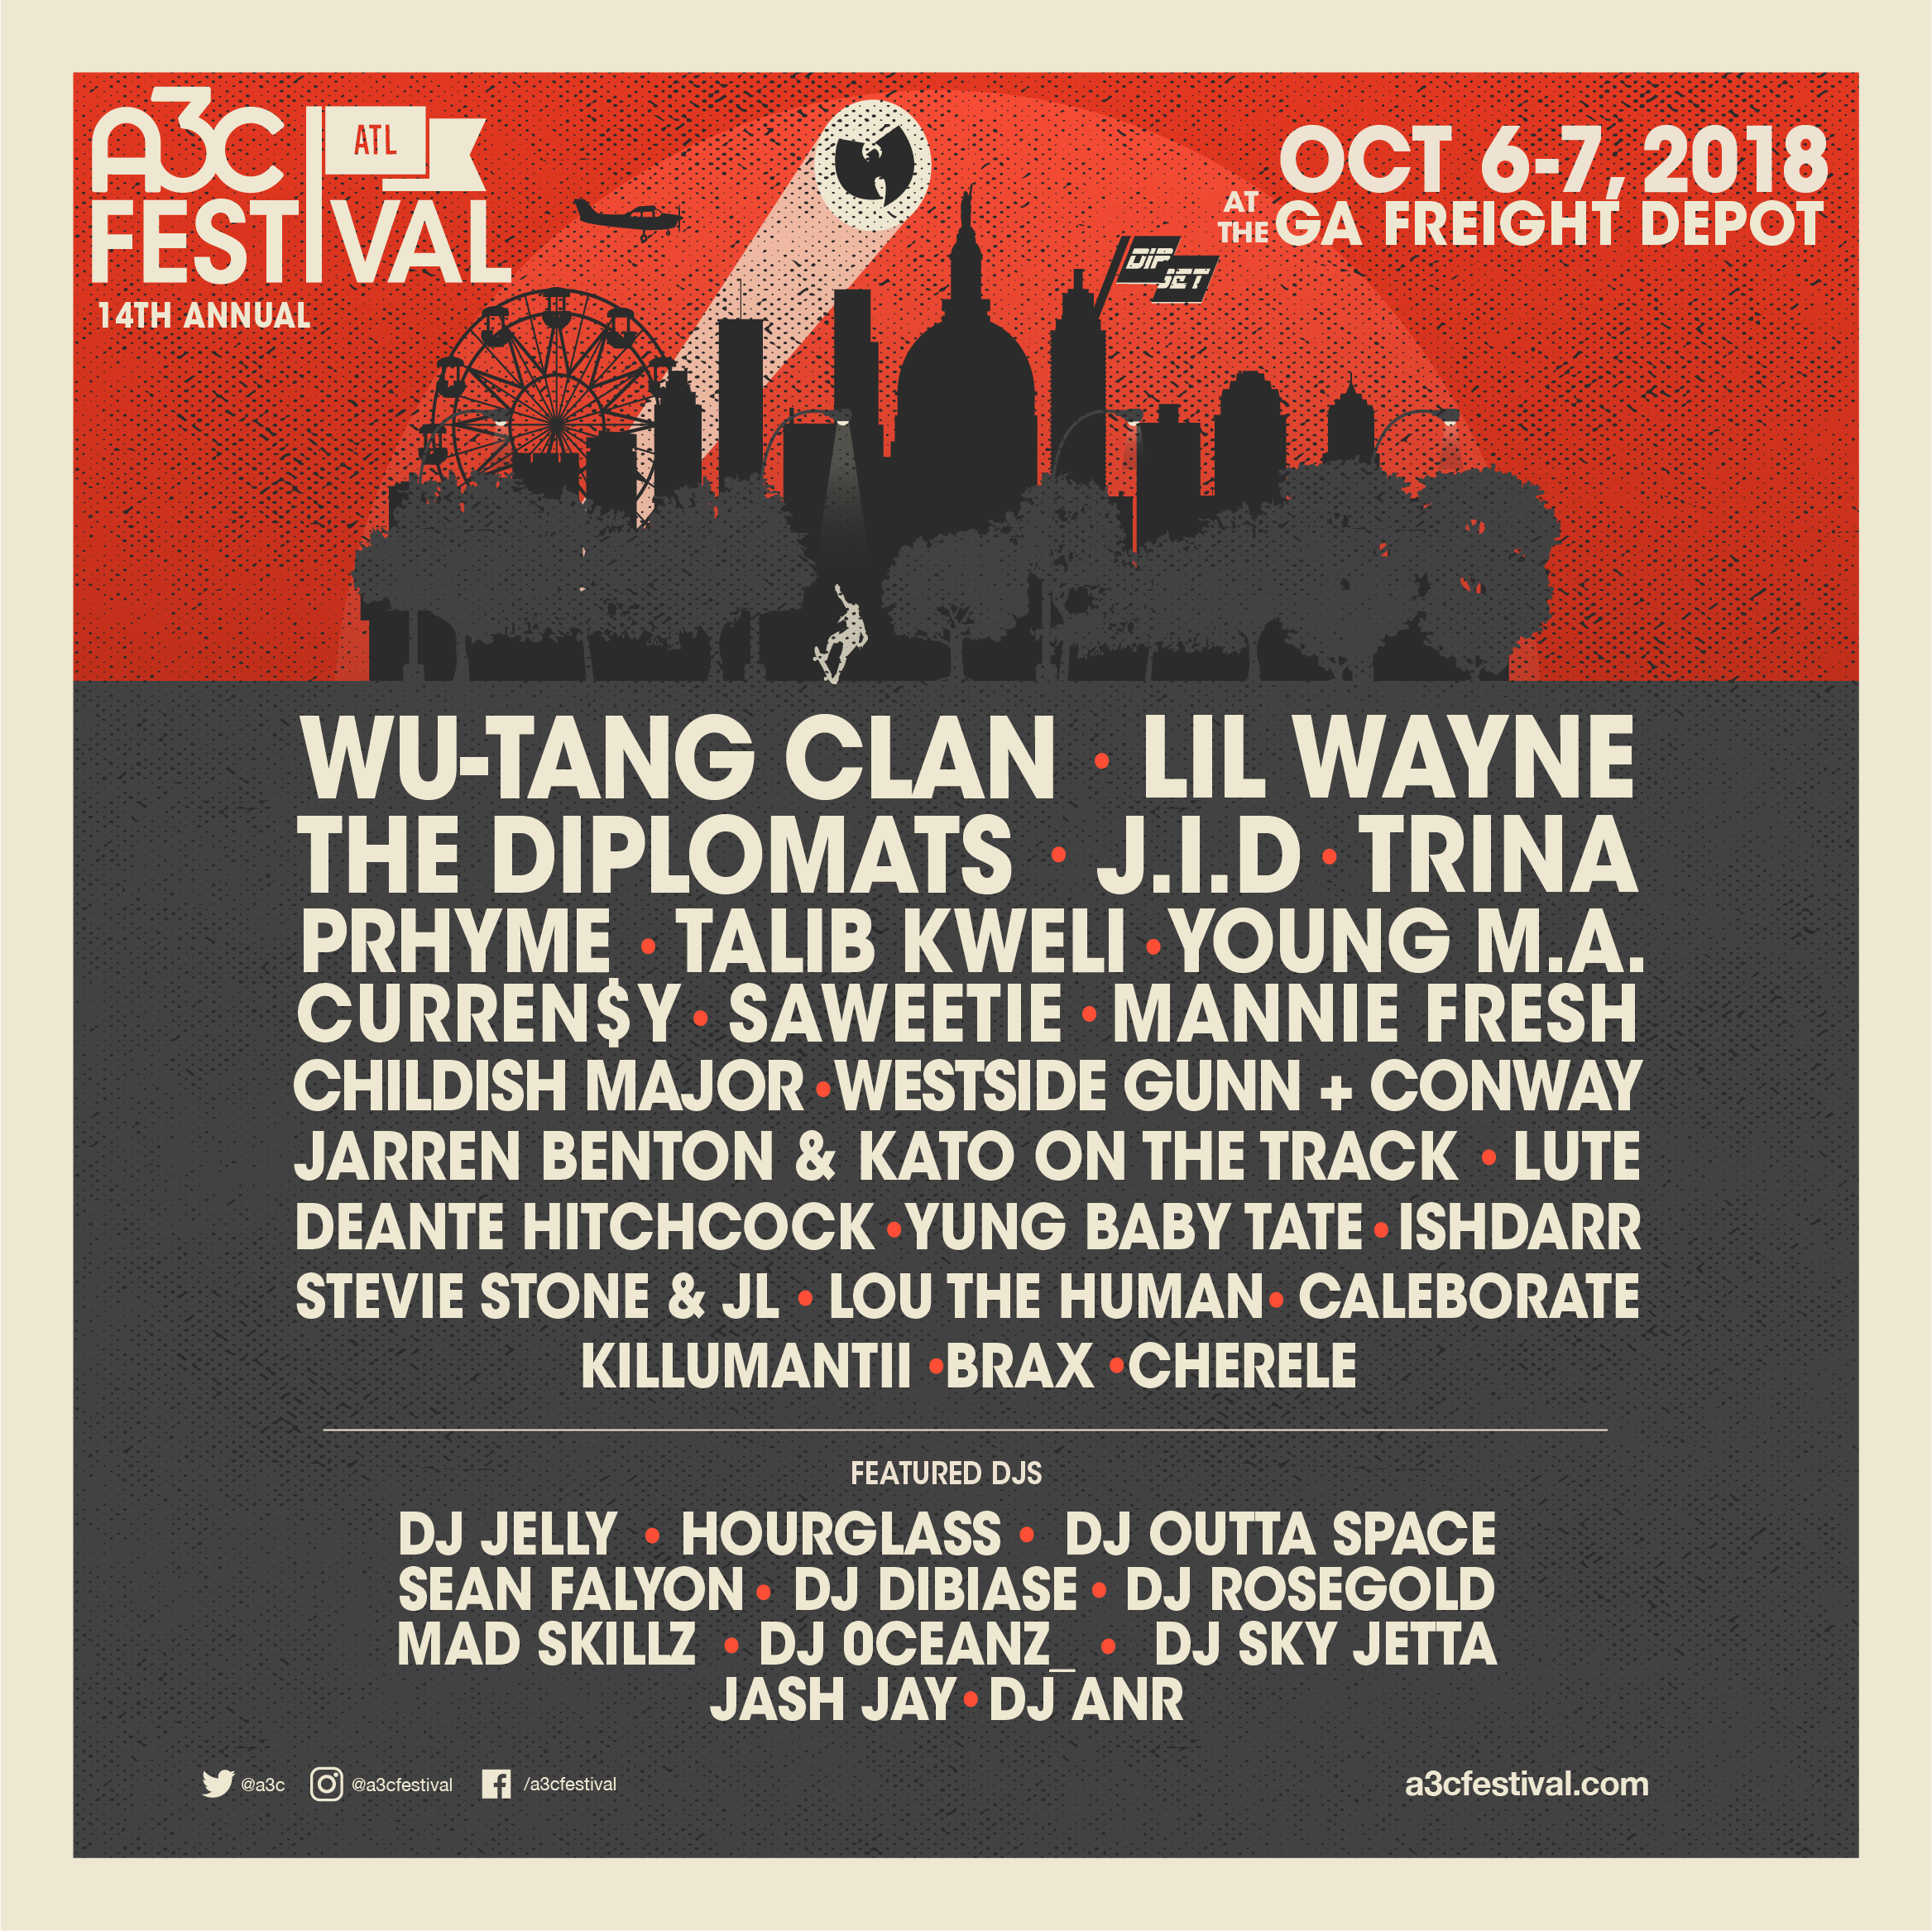 Festival Poster - A3C 2018 - FINAL IG